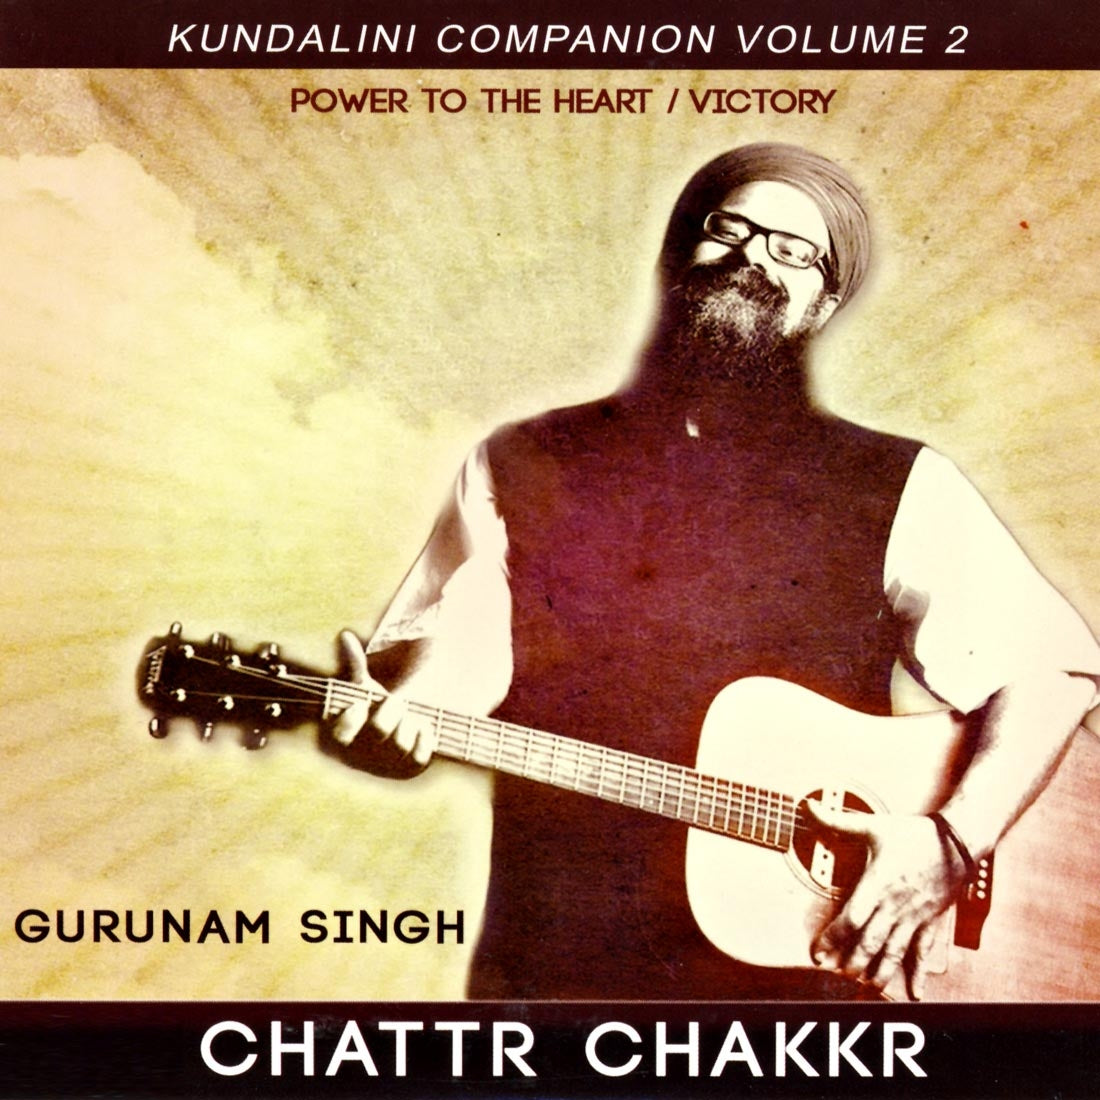 Méditation Chattr Chakkr - version courte - Gurunam Singh